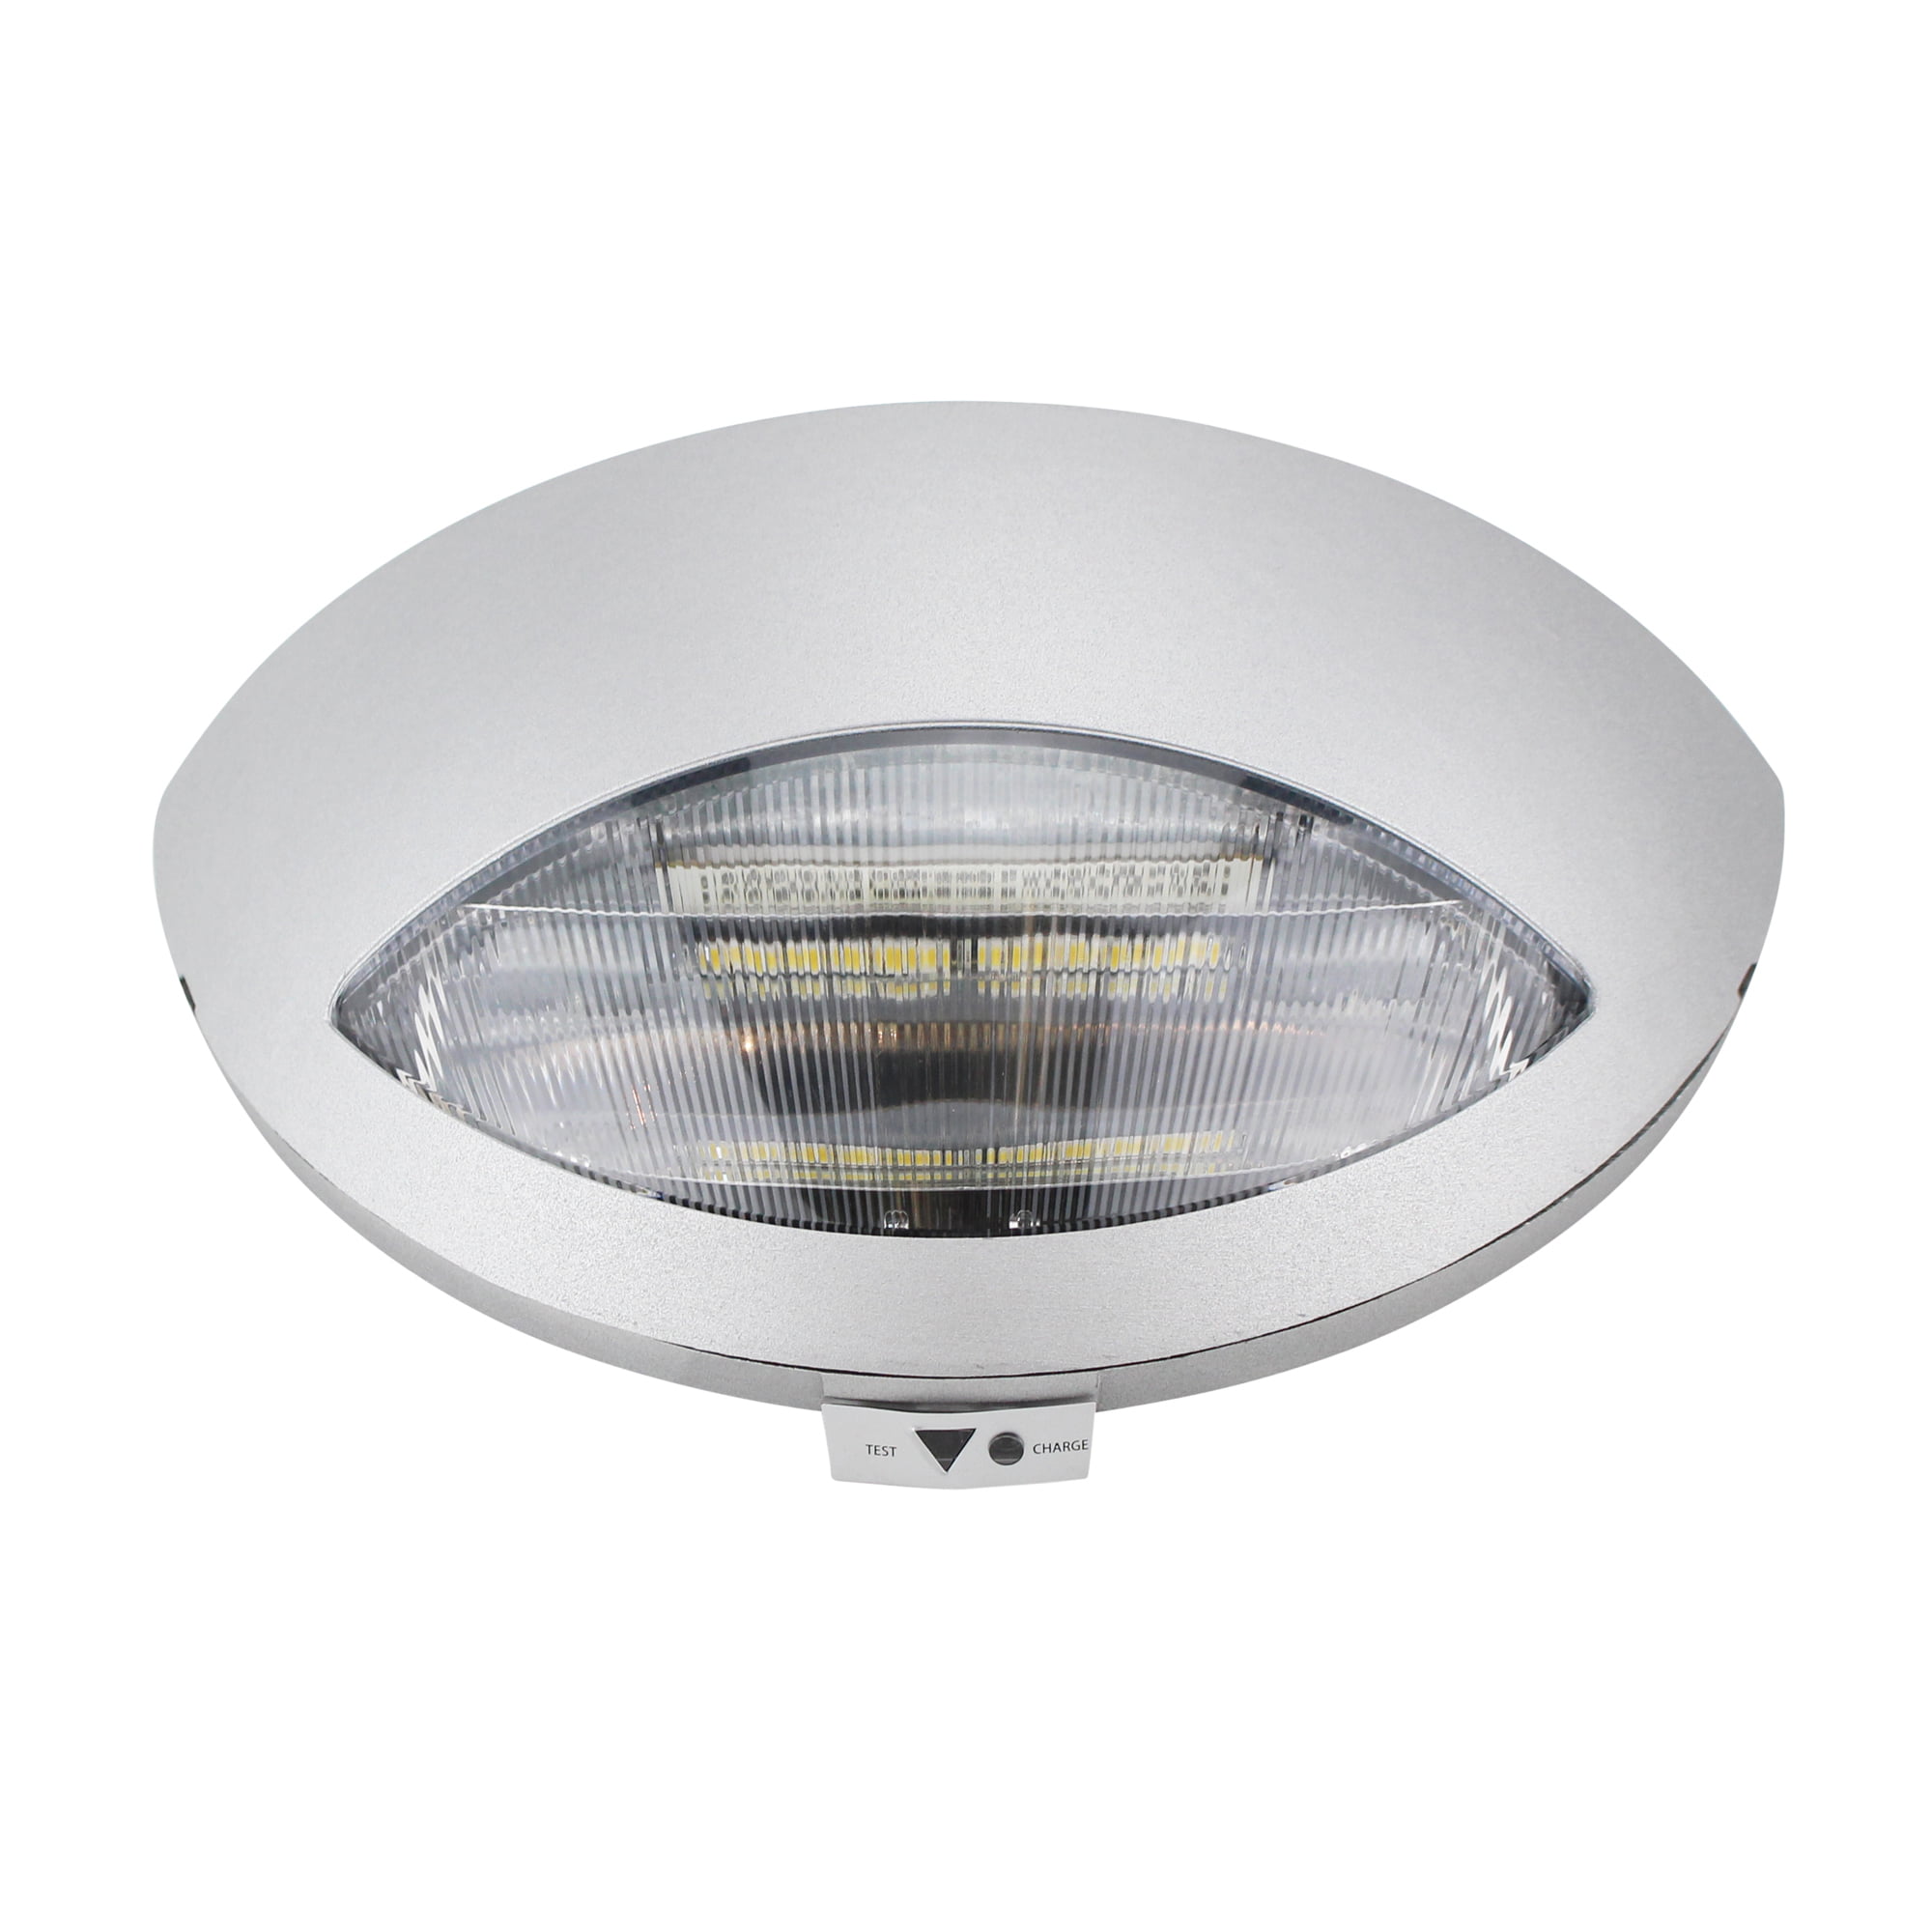 Bronze Eaton Lighting Division Sure-Lites AEL246BZ 4600K LED Architectural Emergency Light